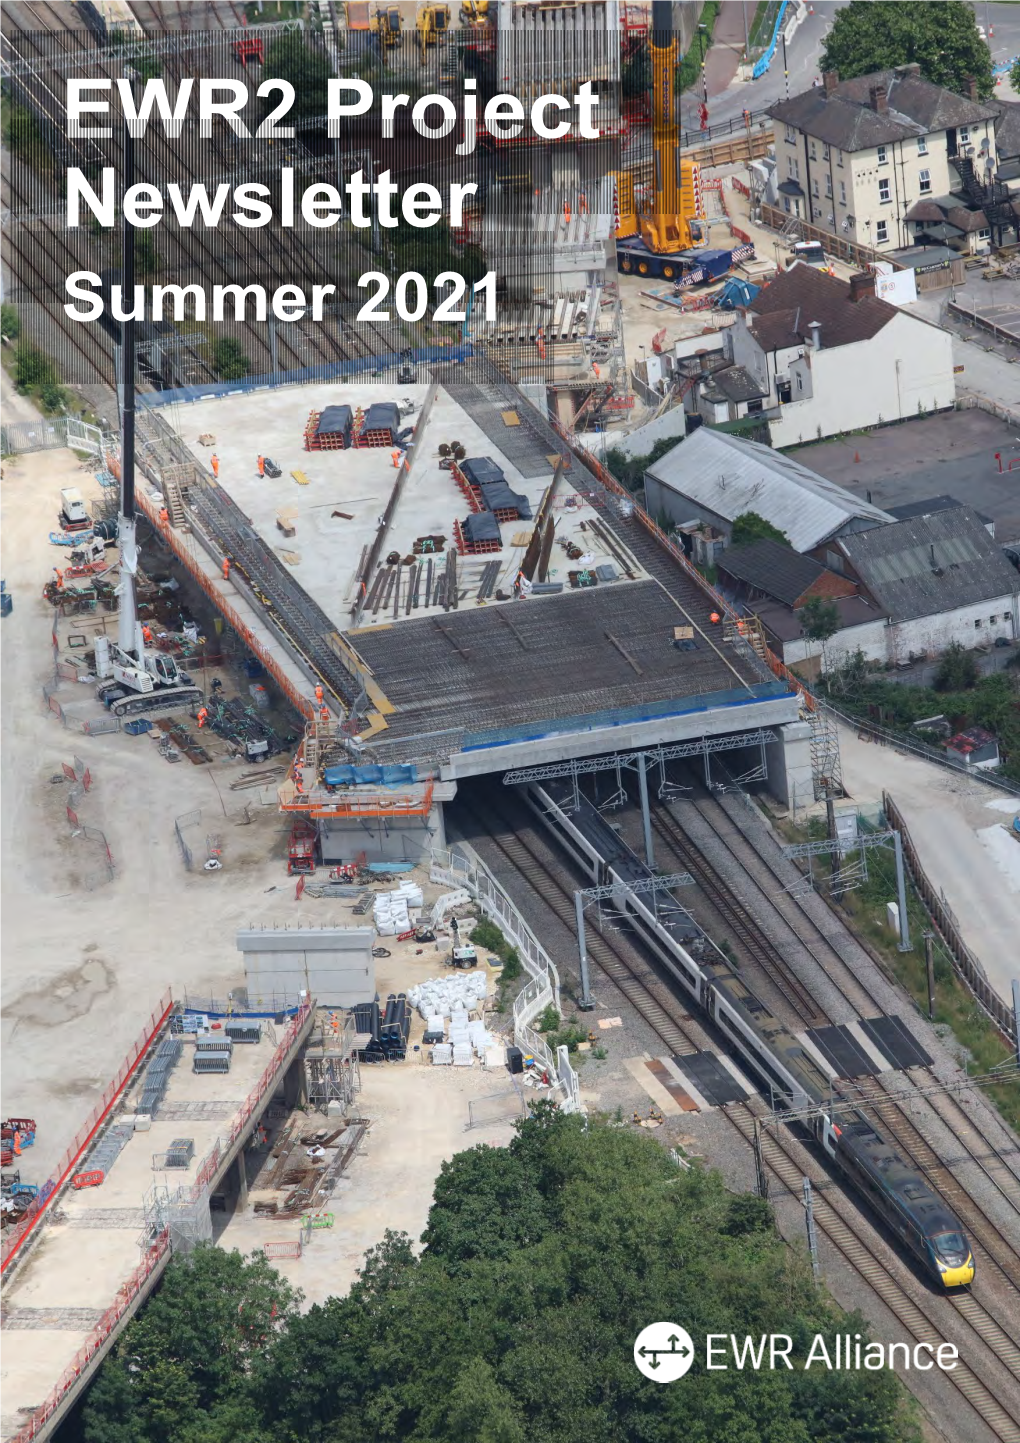 EWR2 Project Newsletter Summer 2021 Newton Longville, Horwood & Swanbourne, Summer 2021